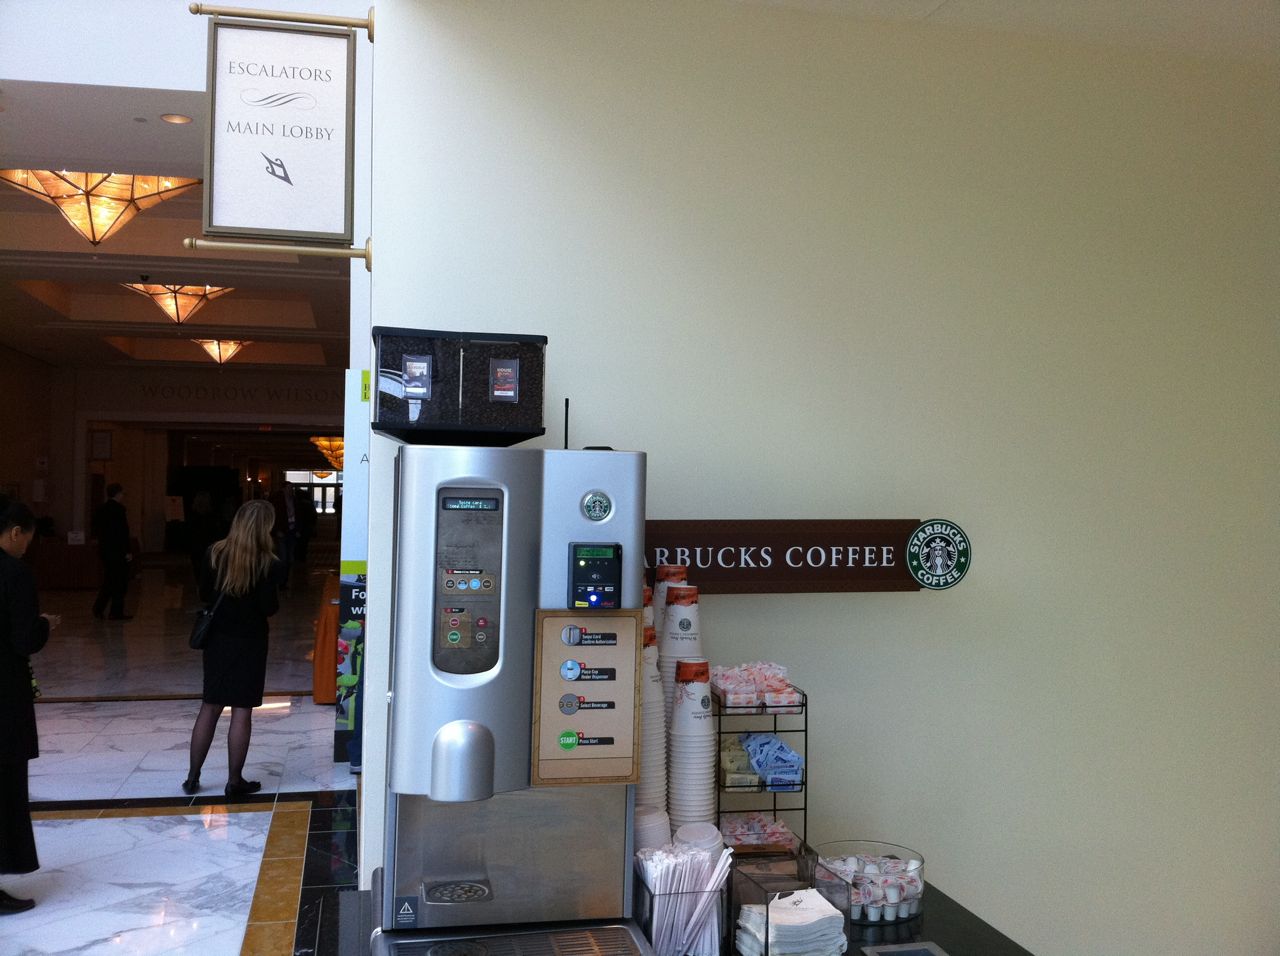 Starbucks Auto Vending Machine and a note on Design | Rajesh Setty1280 x 956